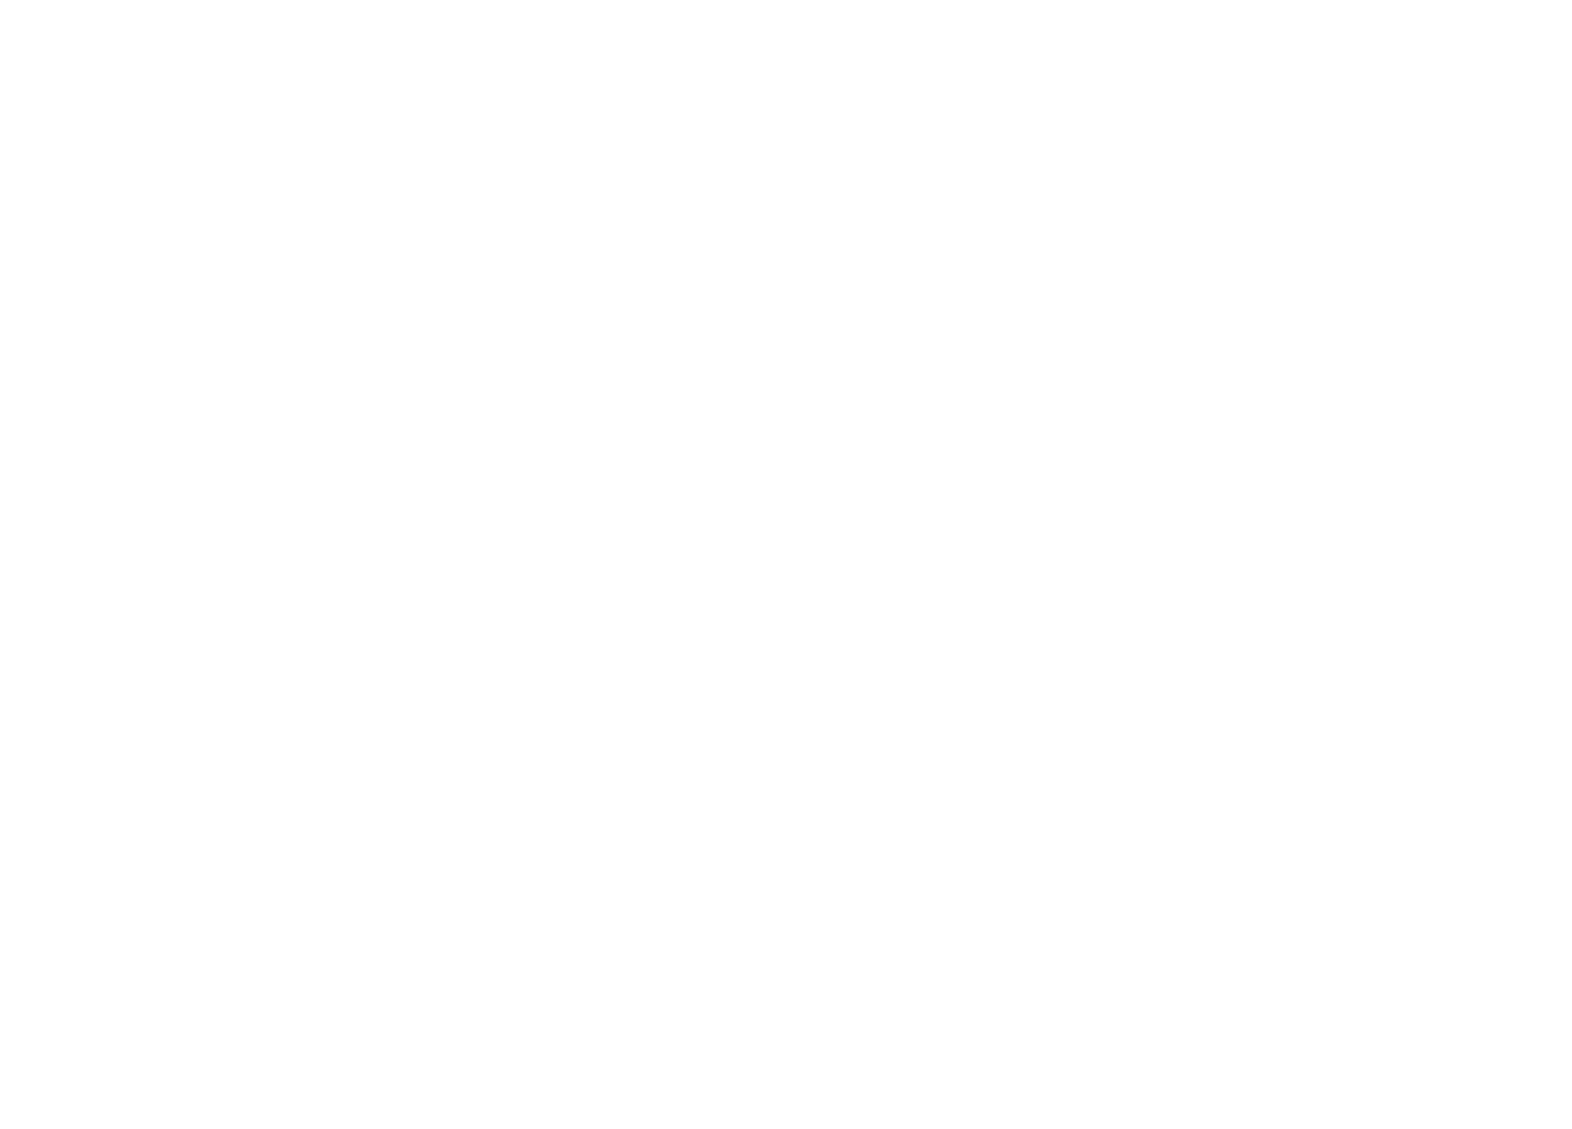 Doosan Bobcat logo for dark backgrounds (transparent PNG)